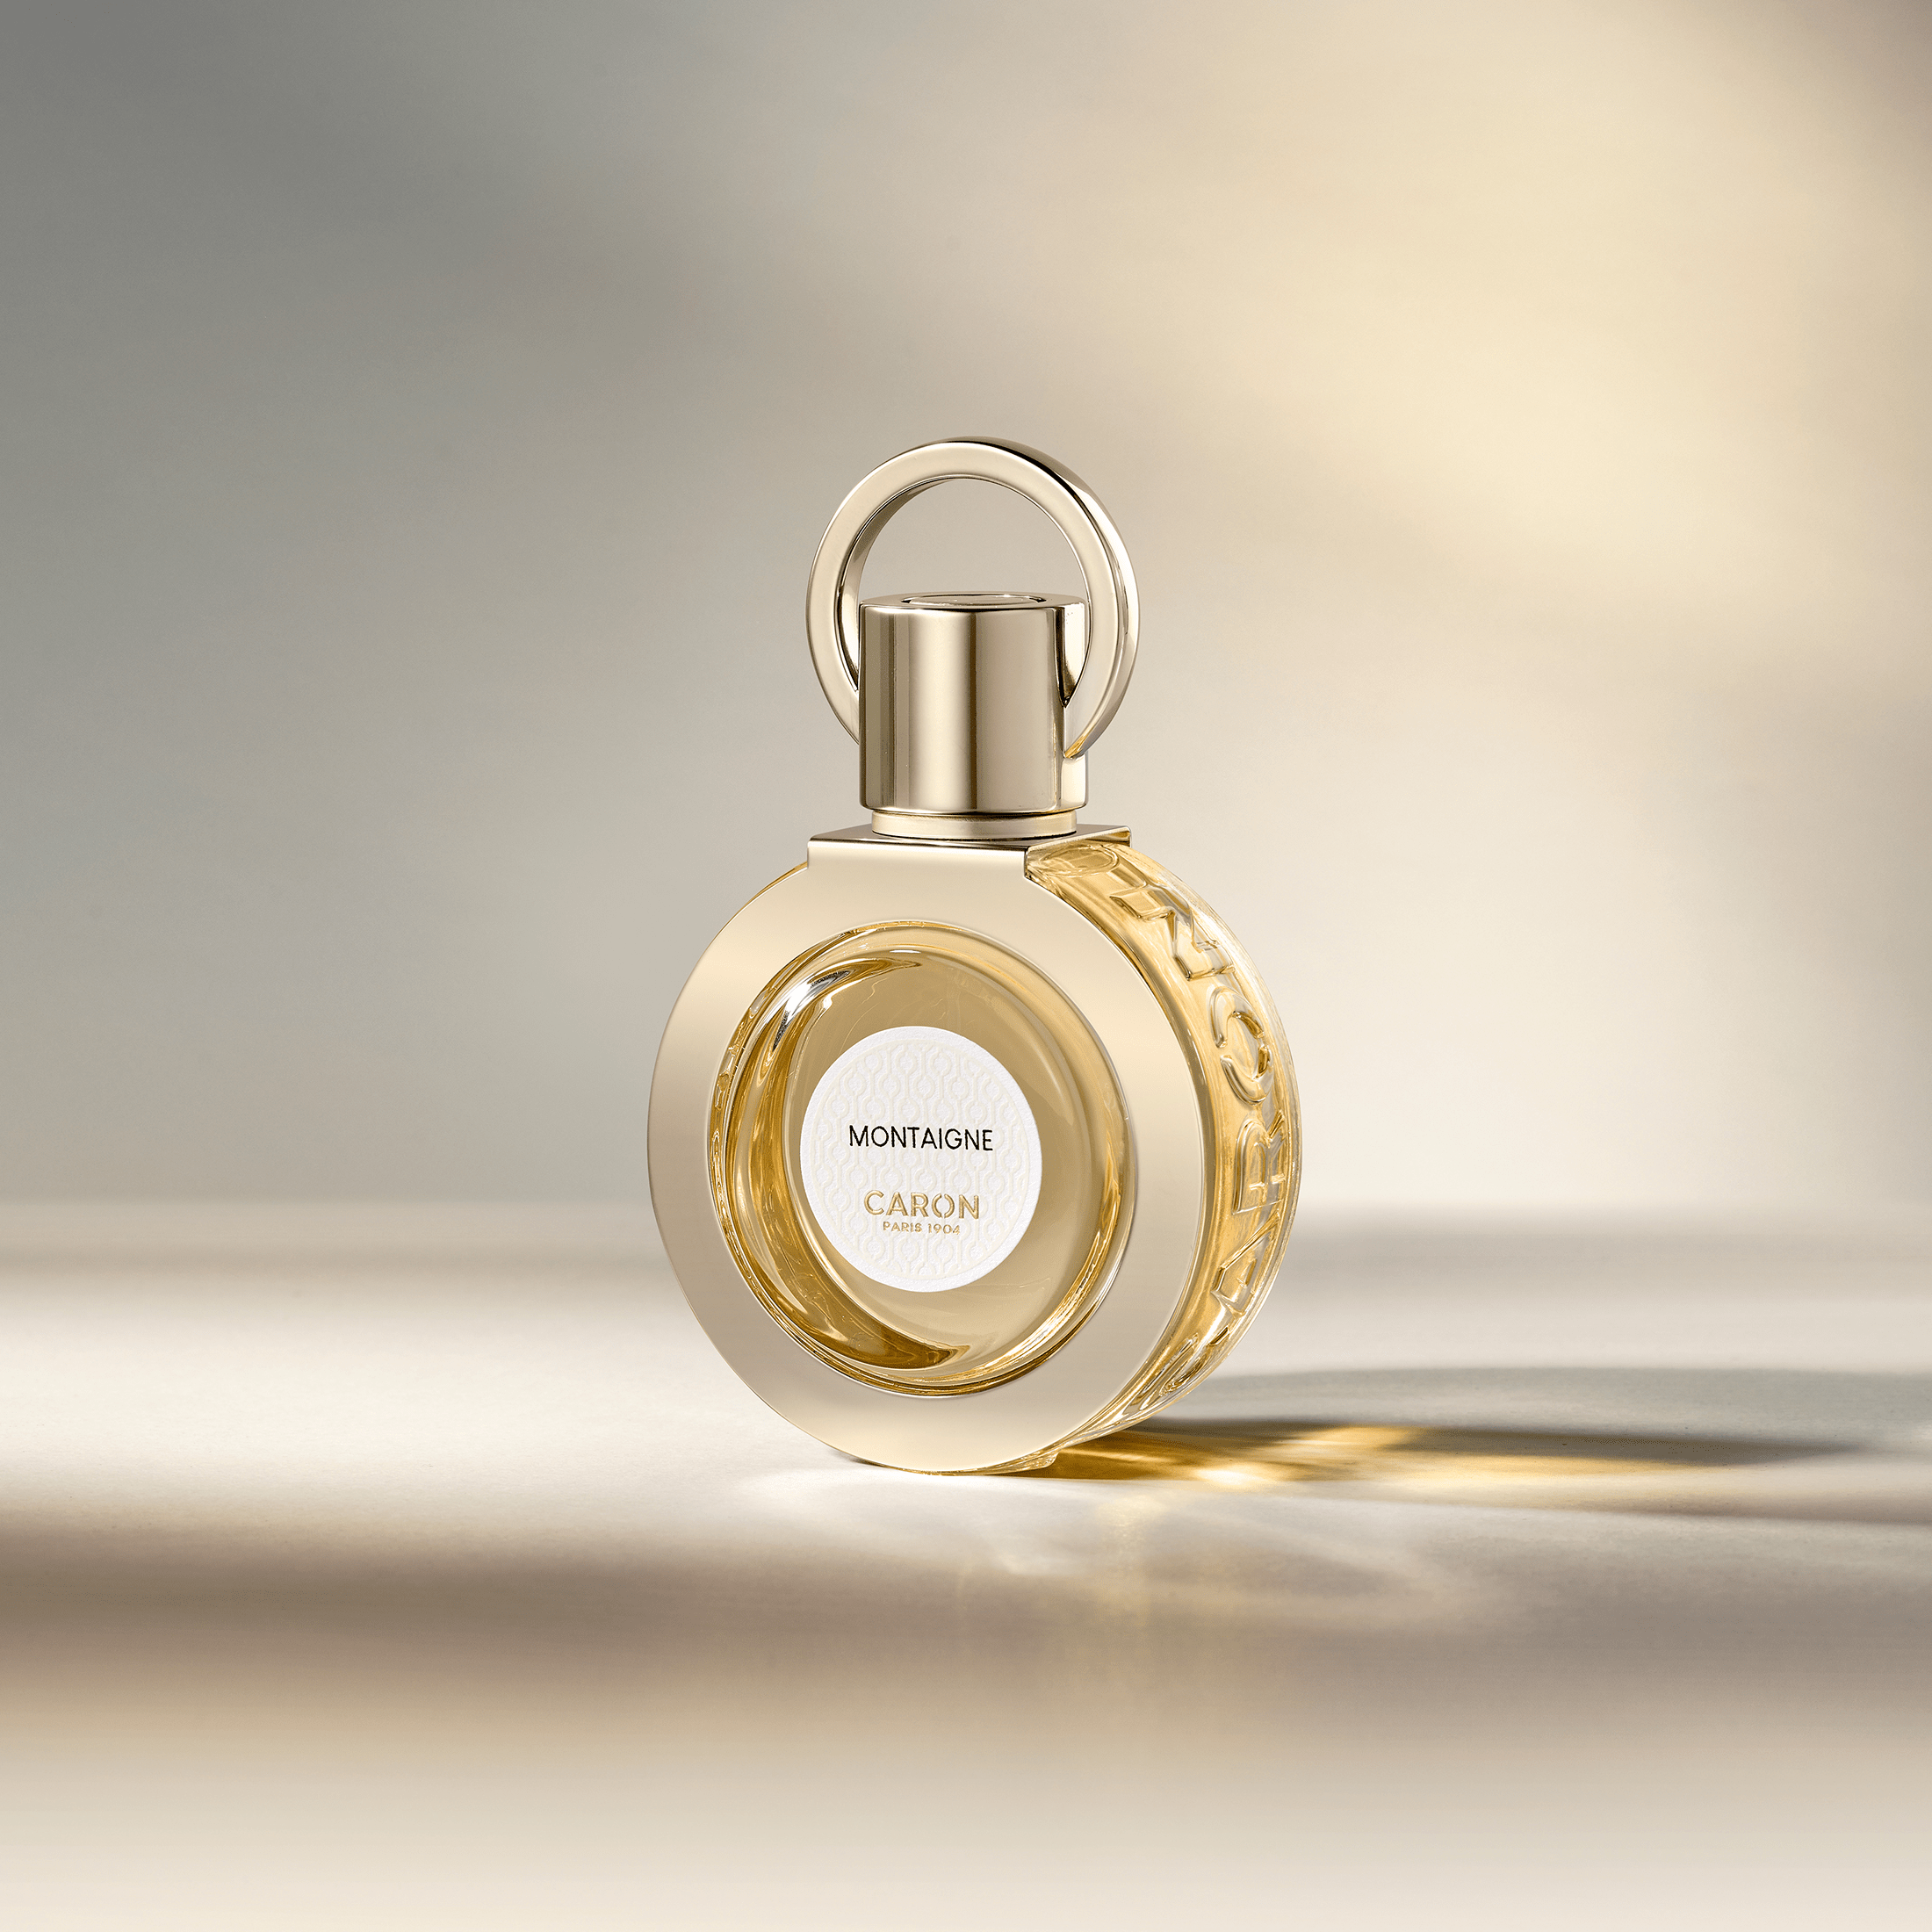 Buy Chanel No 19 Eau de Parfum - 100 ml Online In India